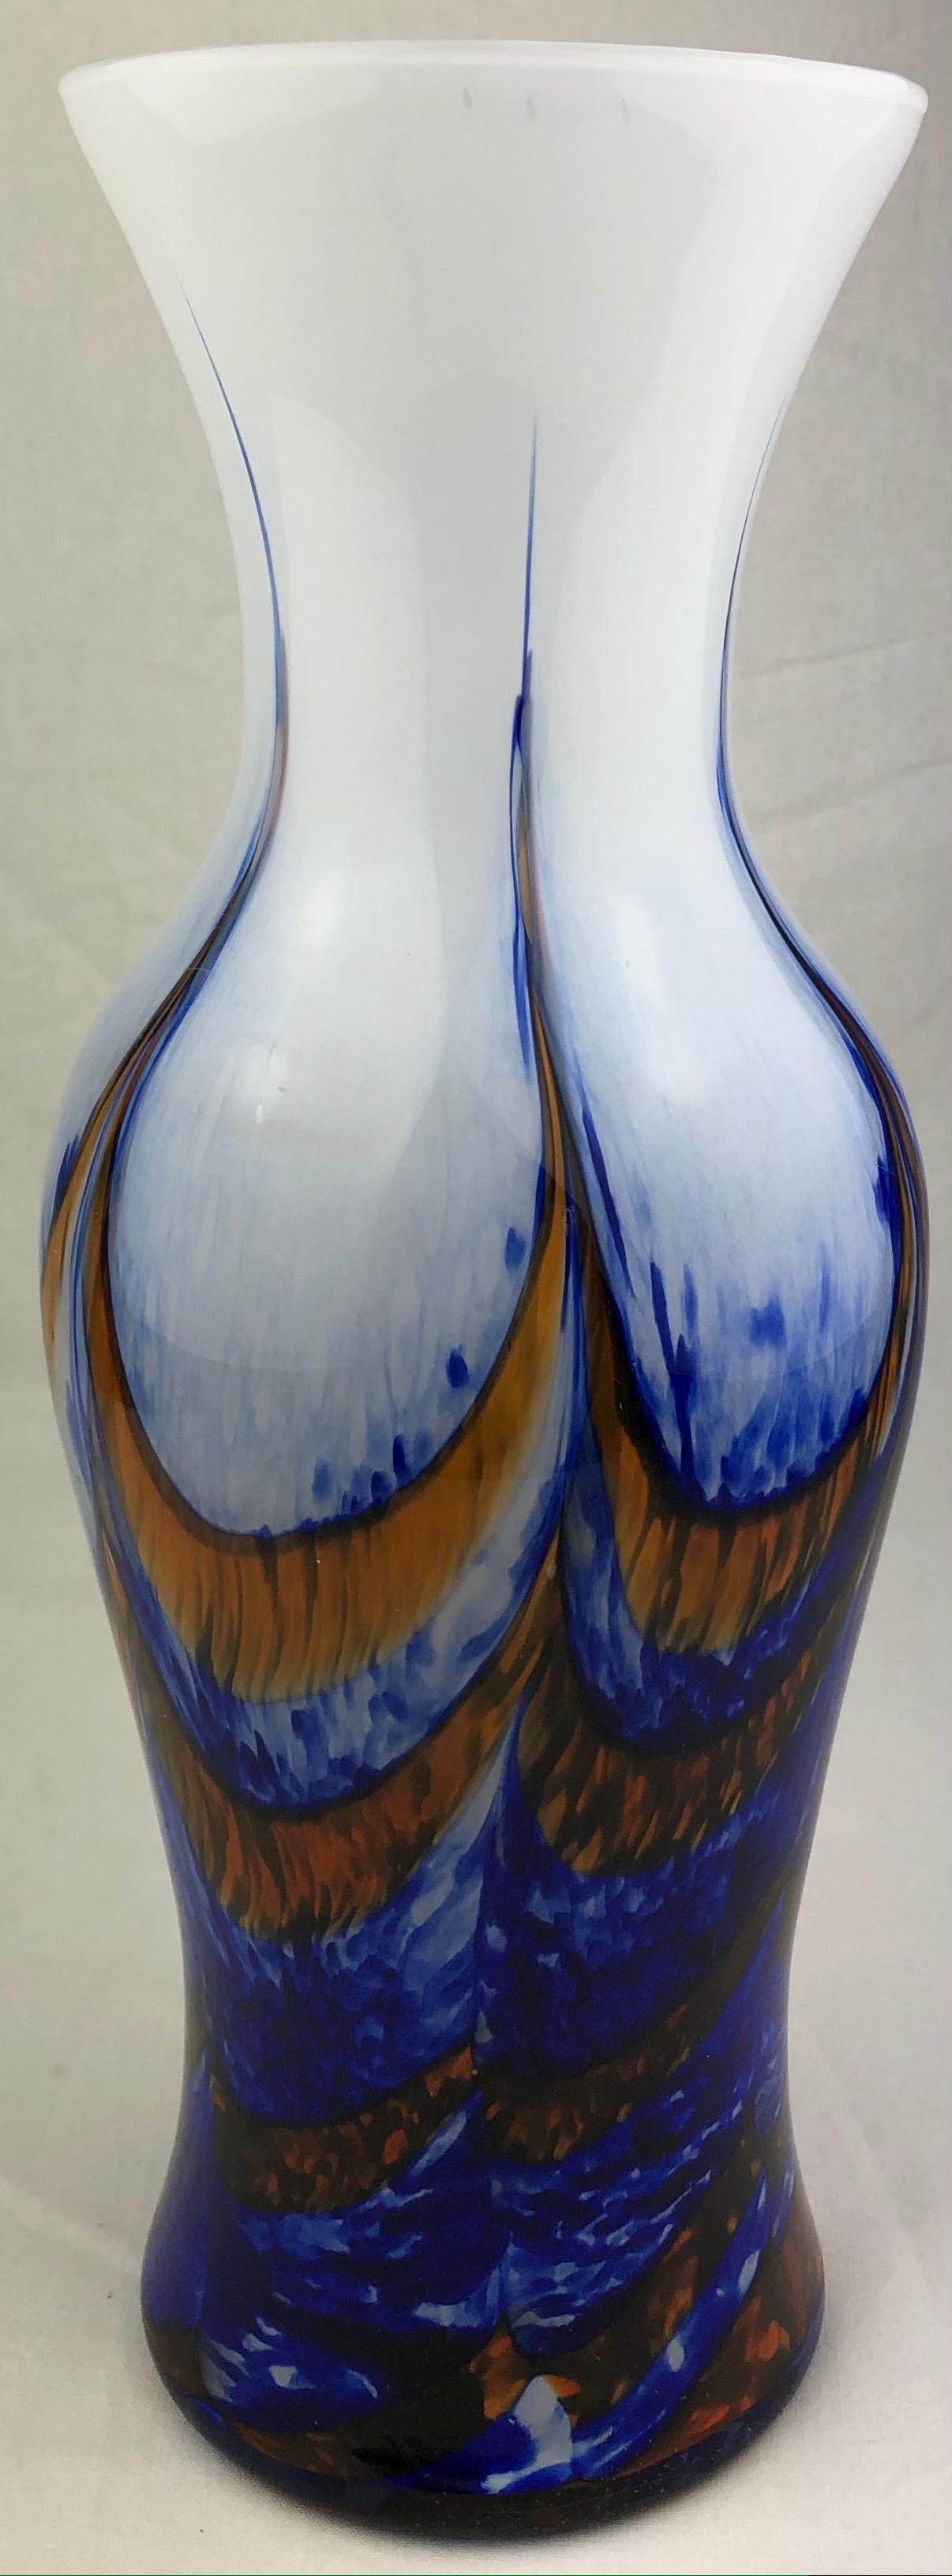 tall glass vases